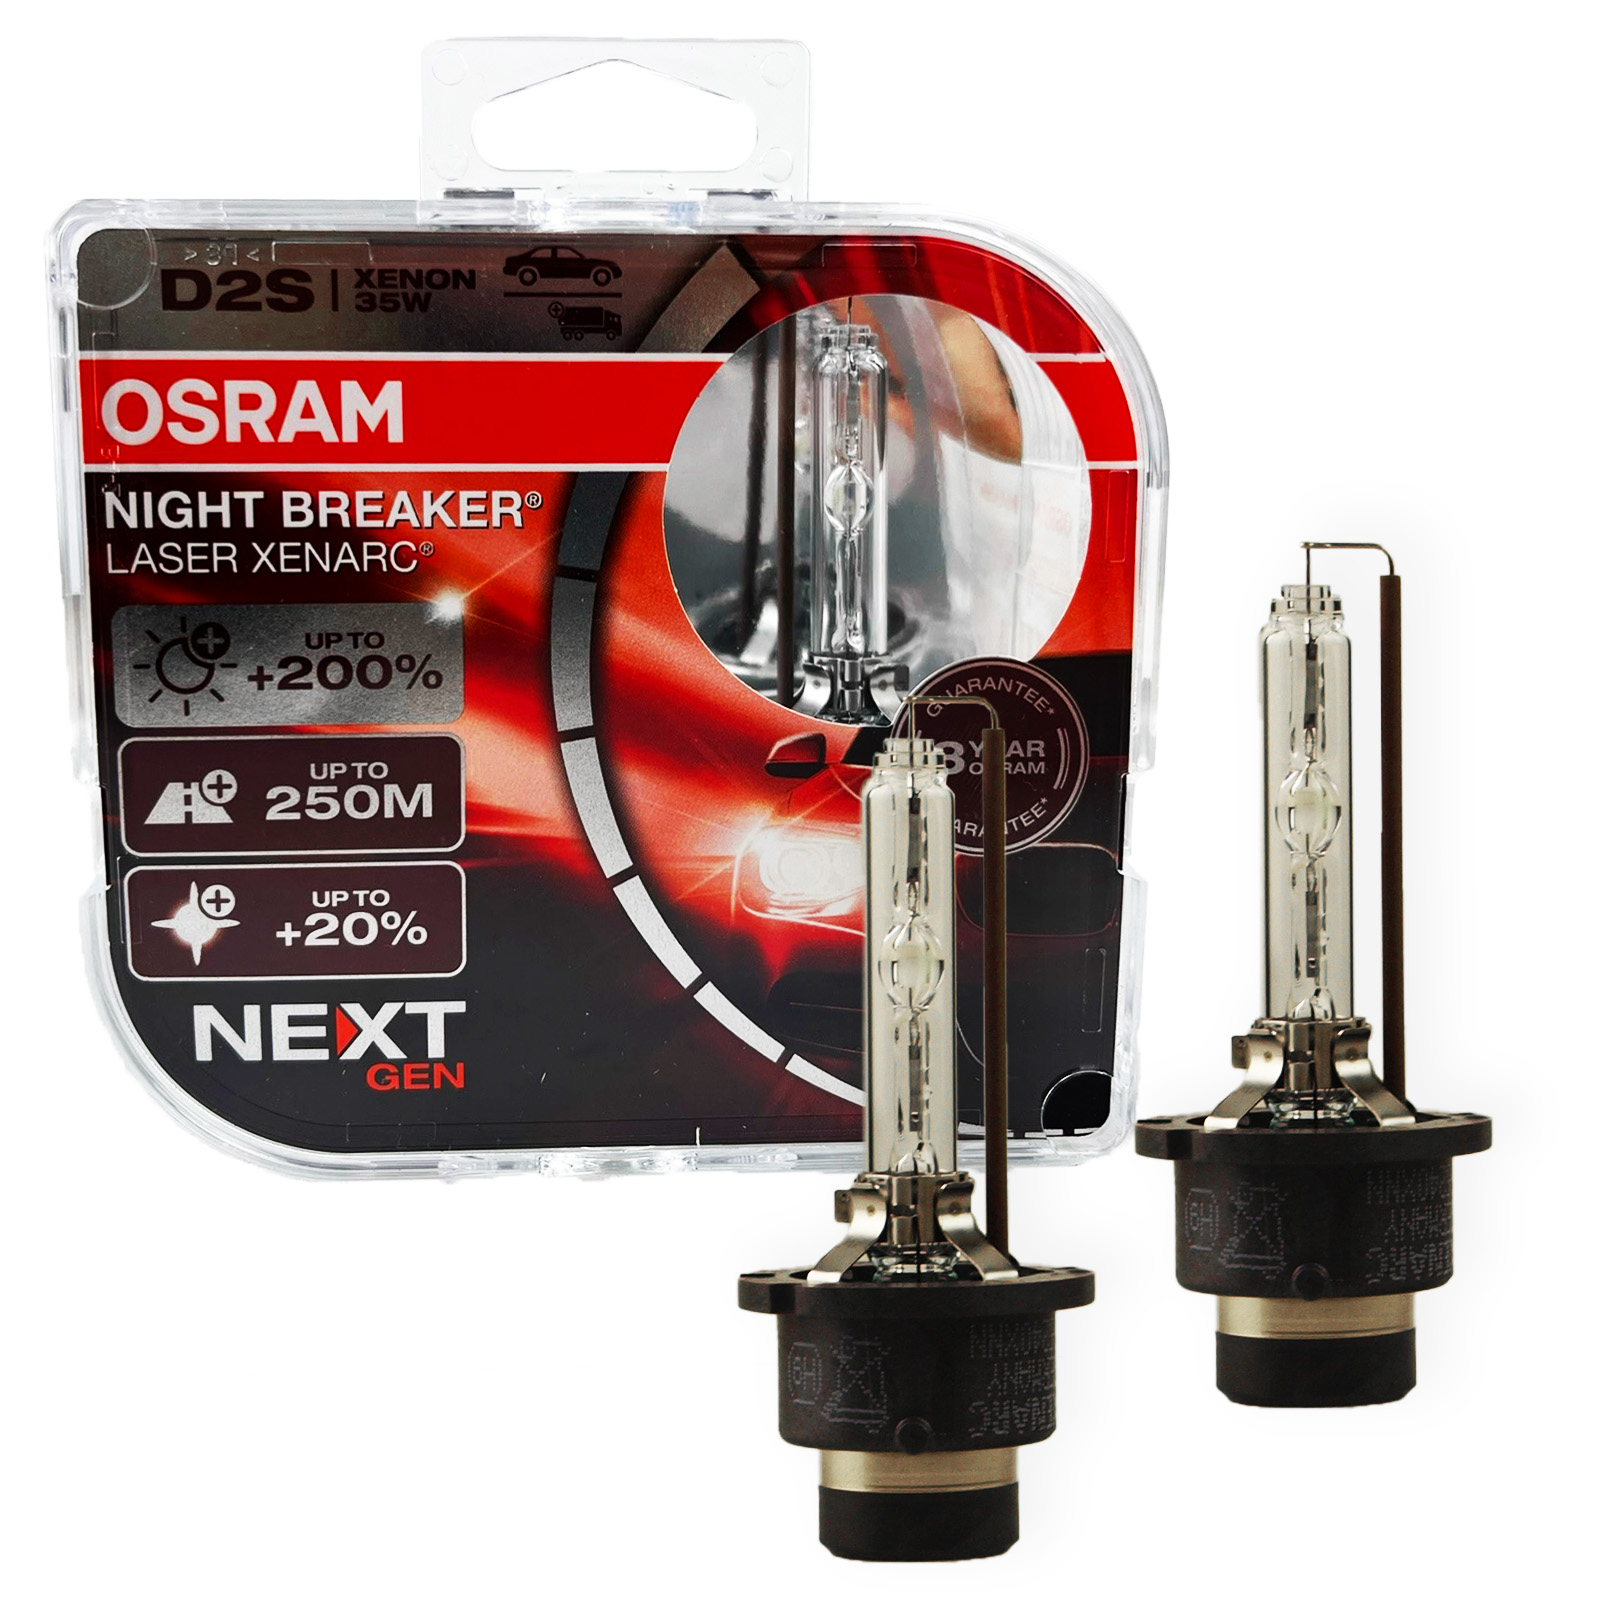 2x Osram D2S 4500K Xenarc Night Breaker Laser Xenon Birnen Brenner